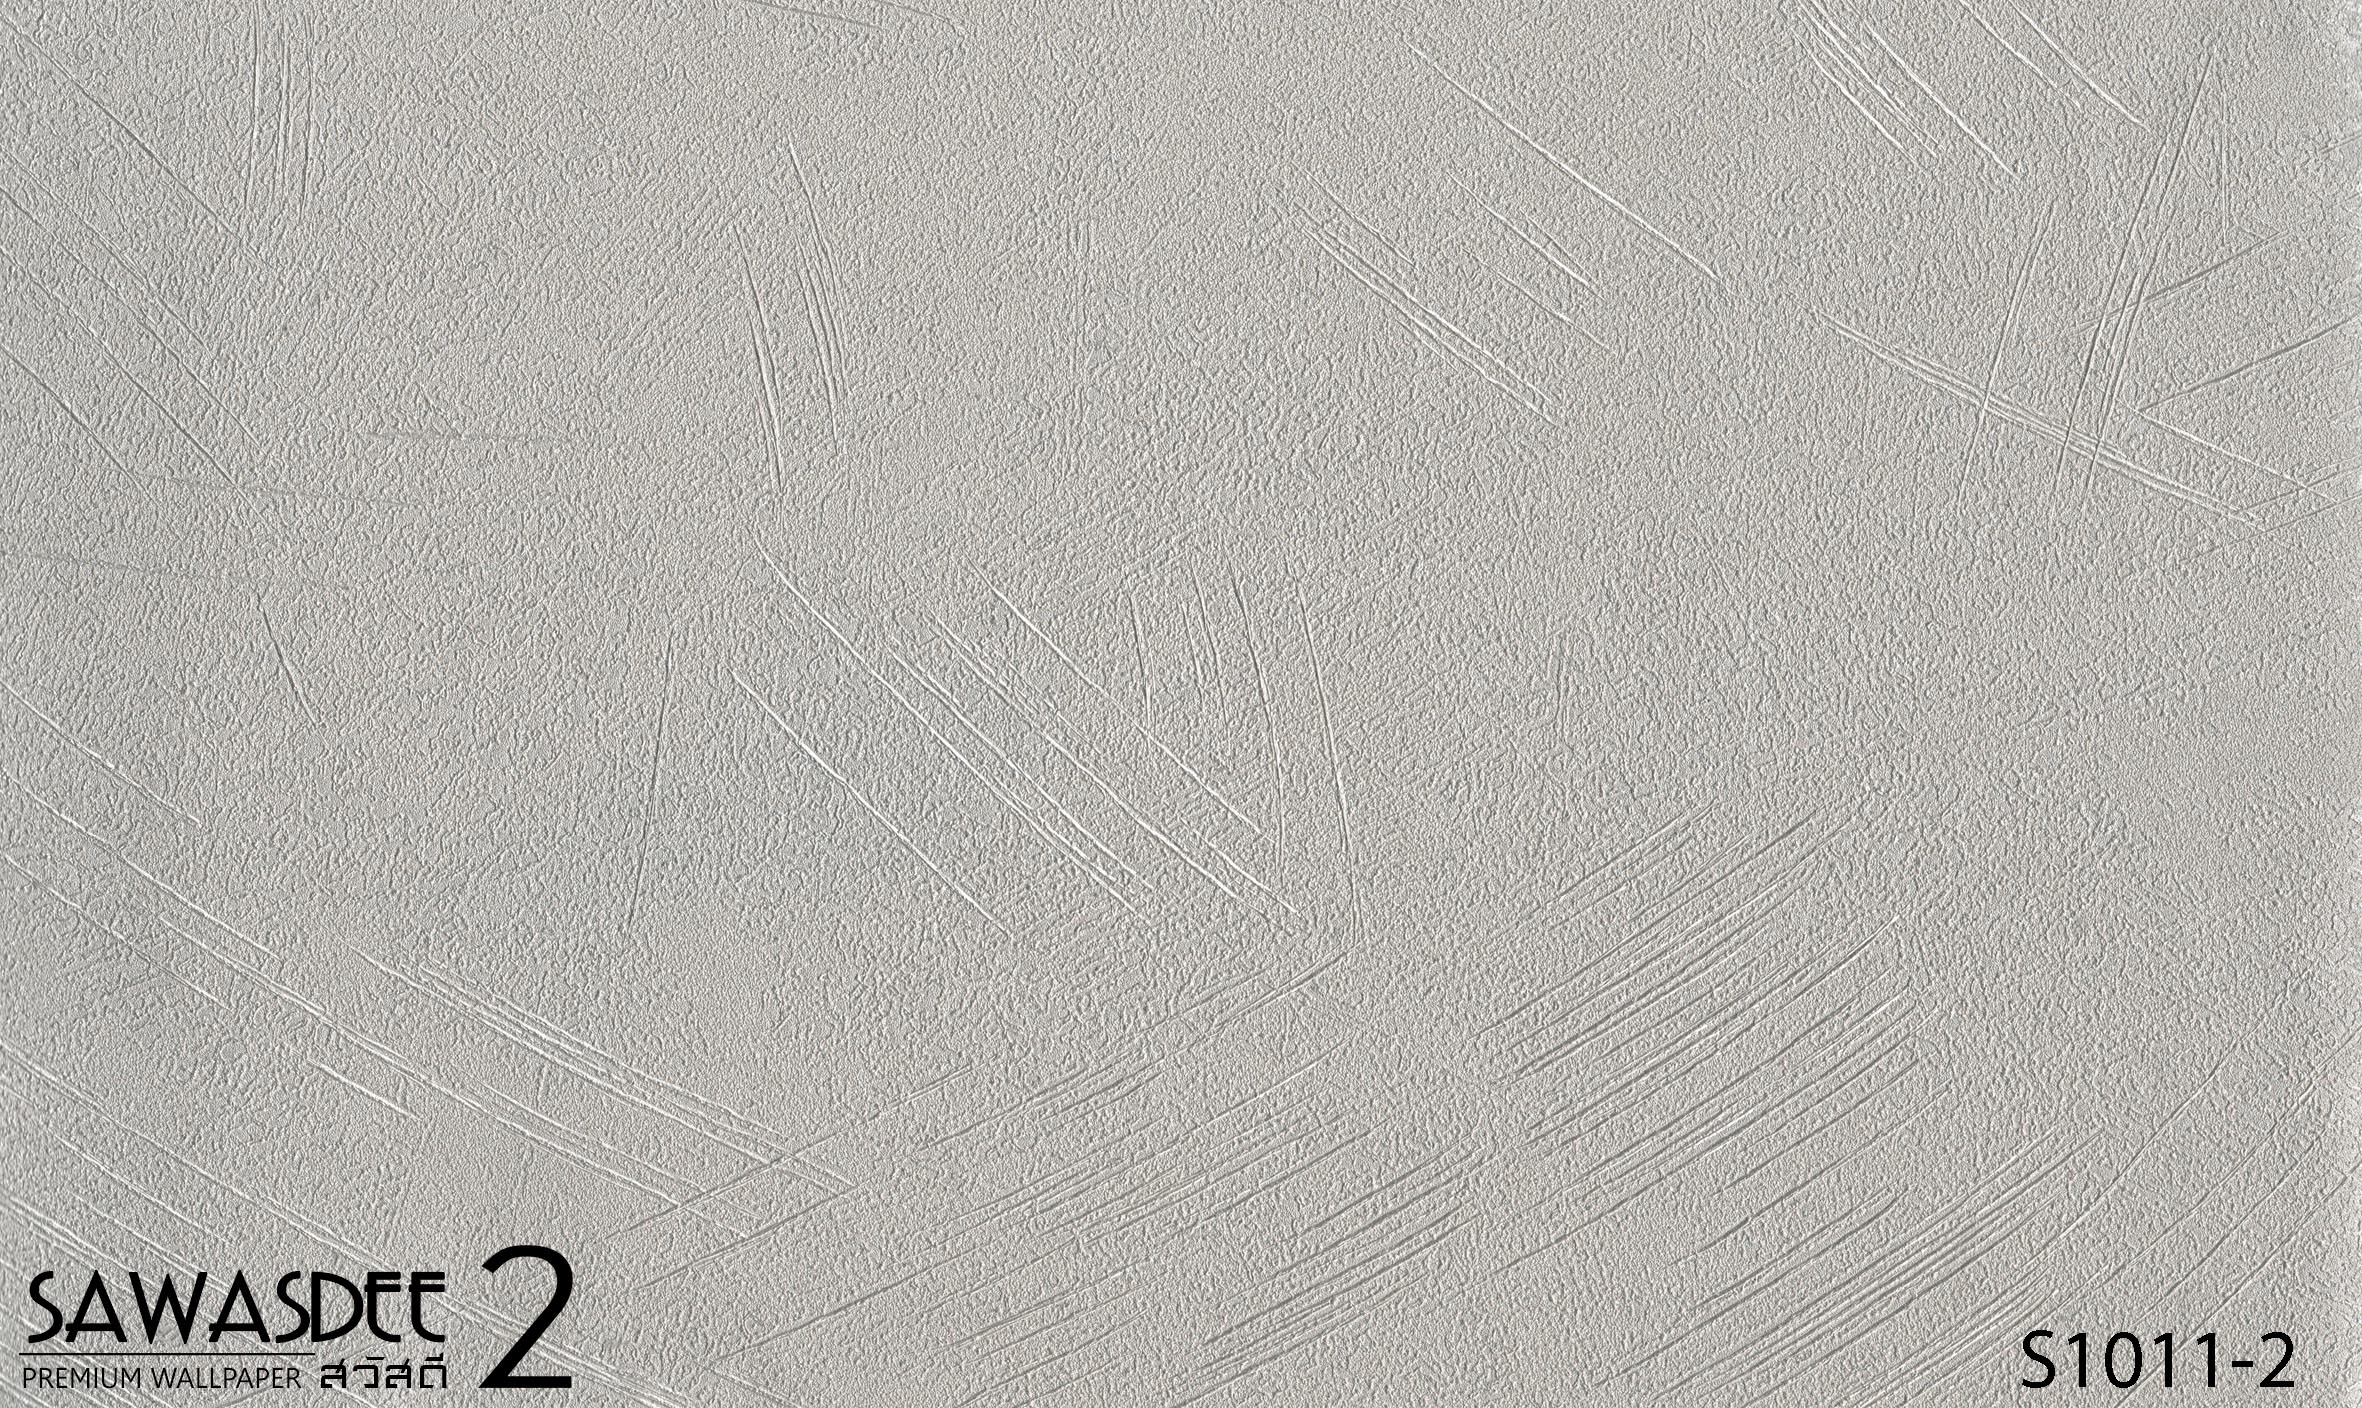 Wallpaper (SAWASDEE 2) S1011-2